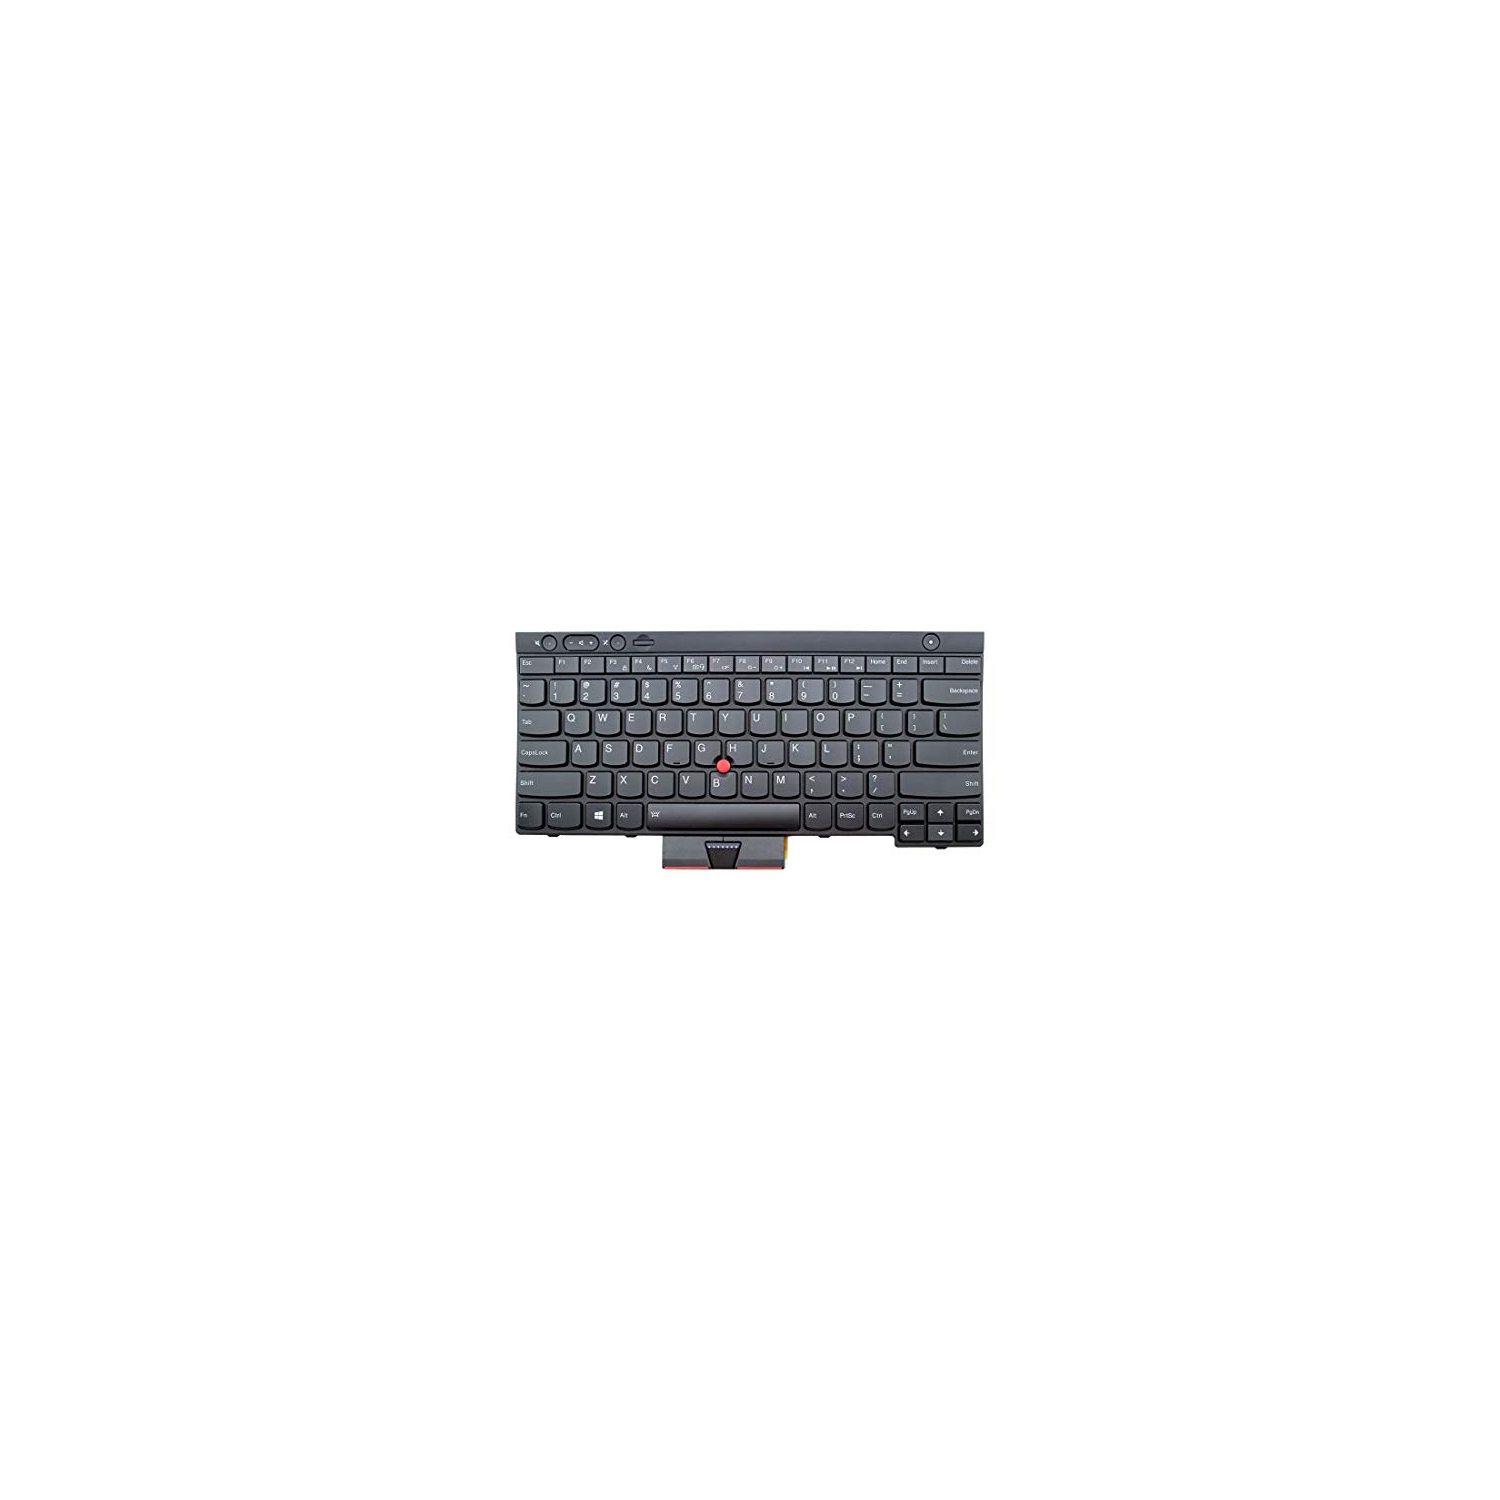 LaptopKing Replacement Keyboard for Lenovo Ideapad Thinkpad T430 T430S T430I T530 T530I W530 X230 X230T X230I L430 L530 series